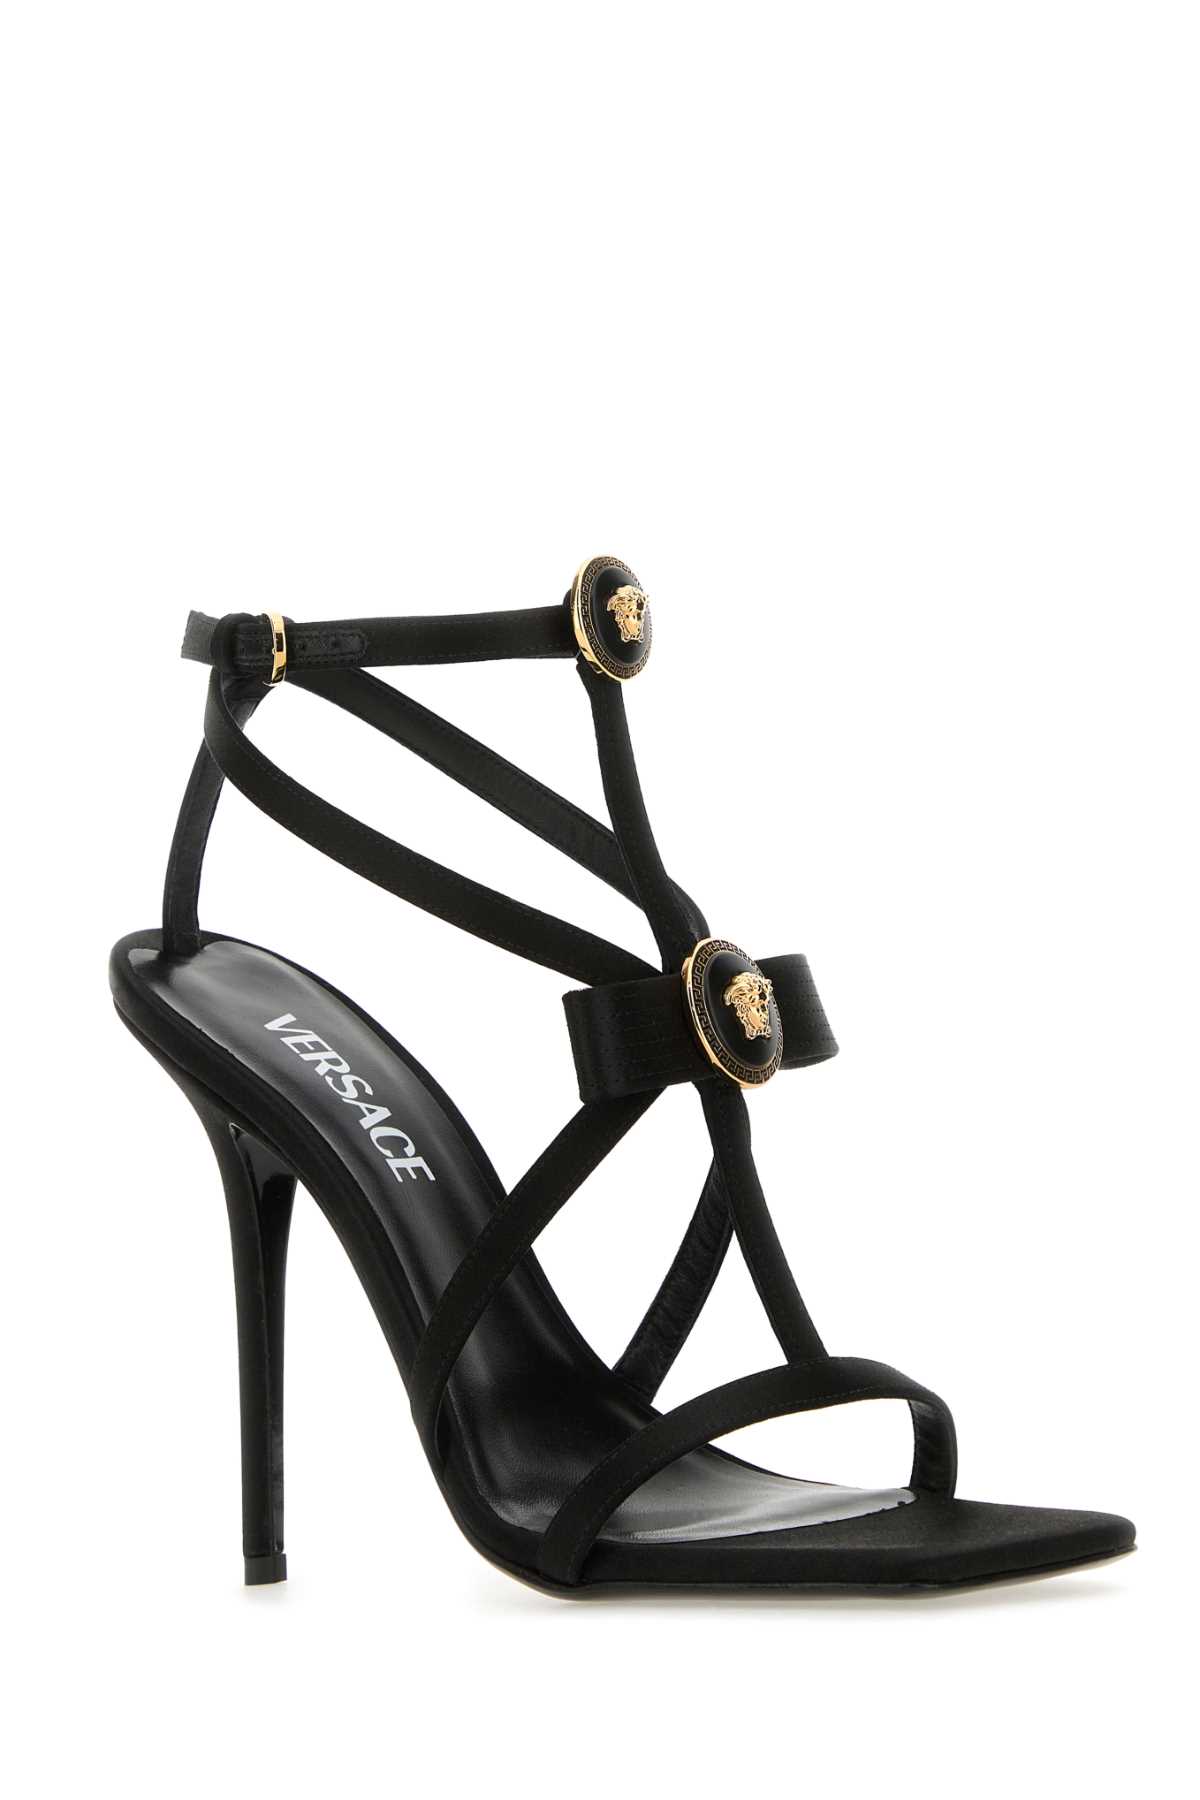 Versace Black Satin Sandals In Blackgold